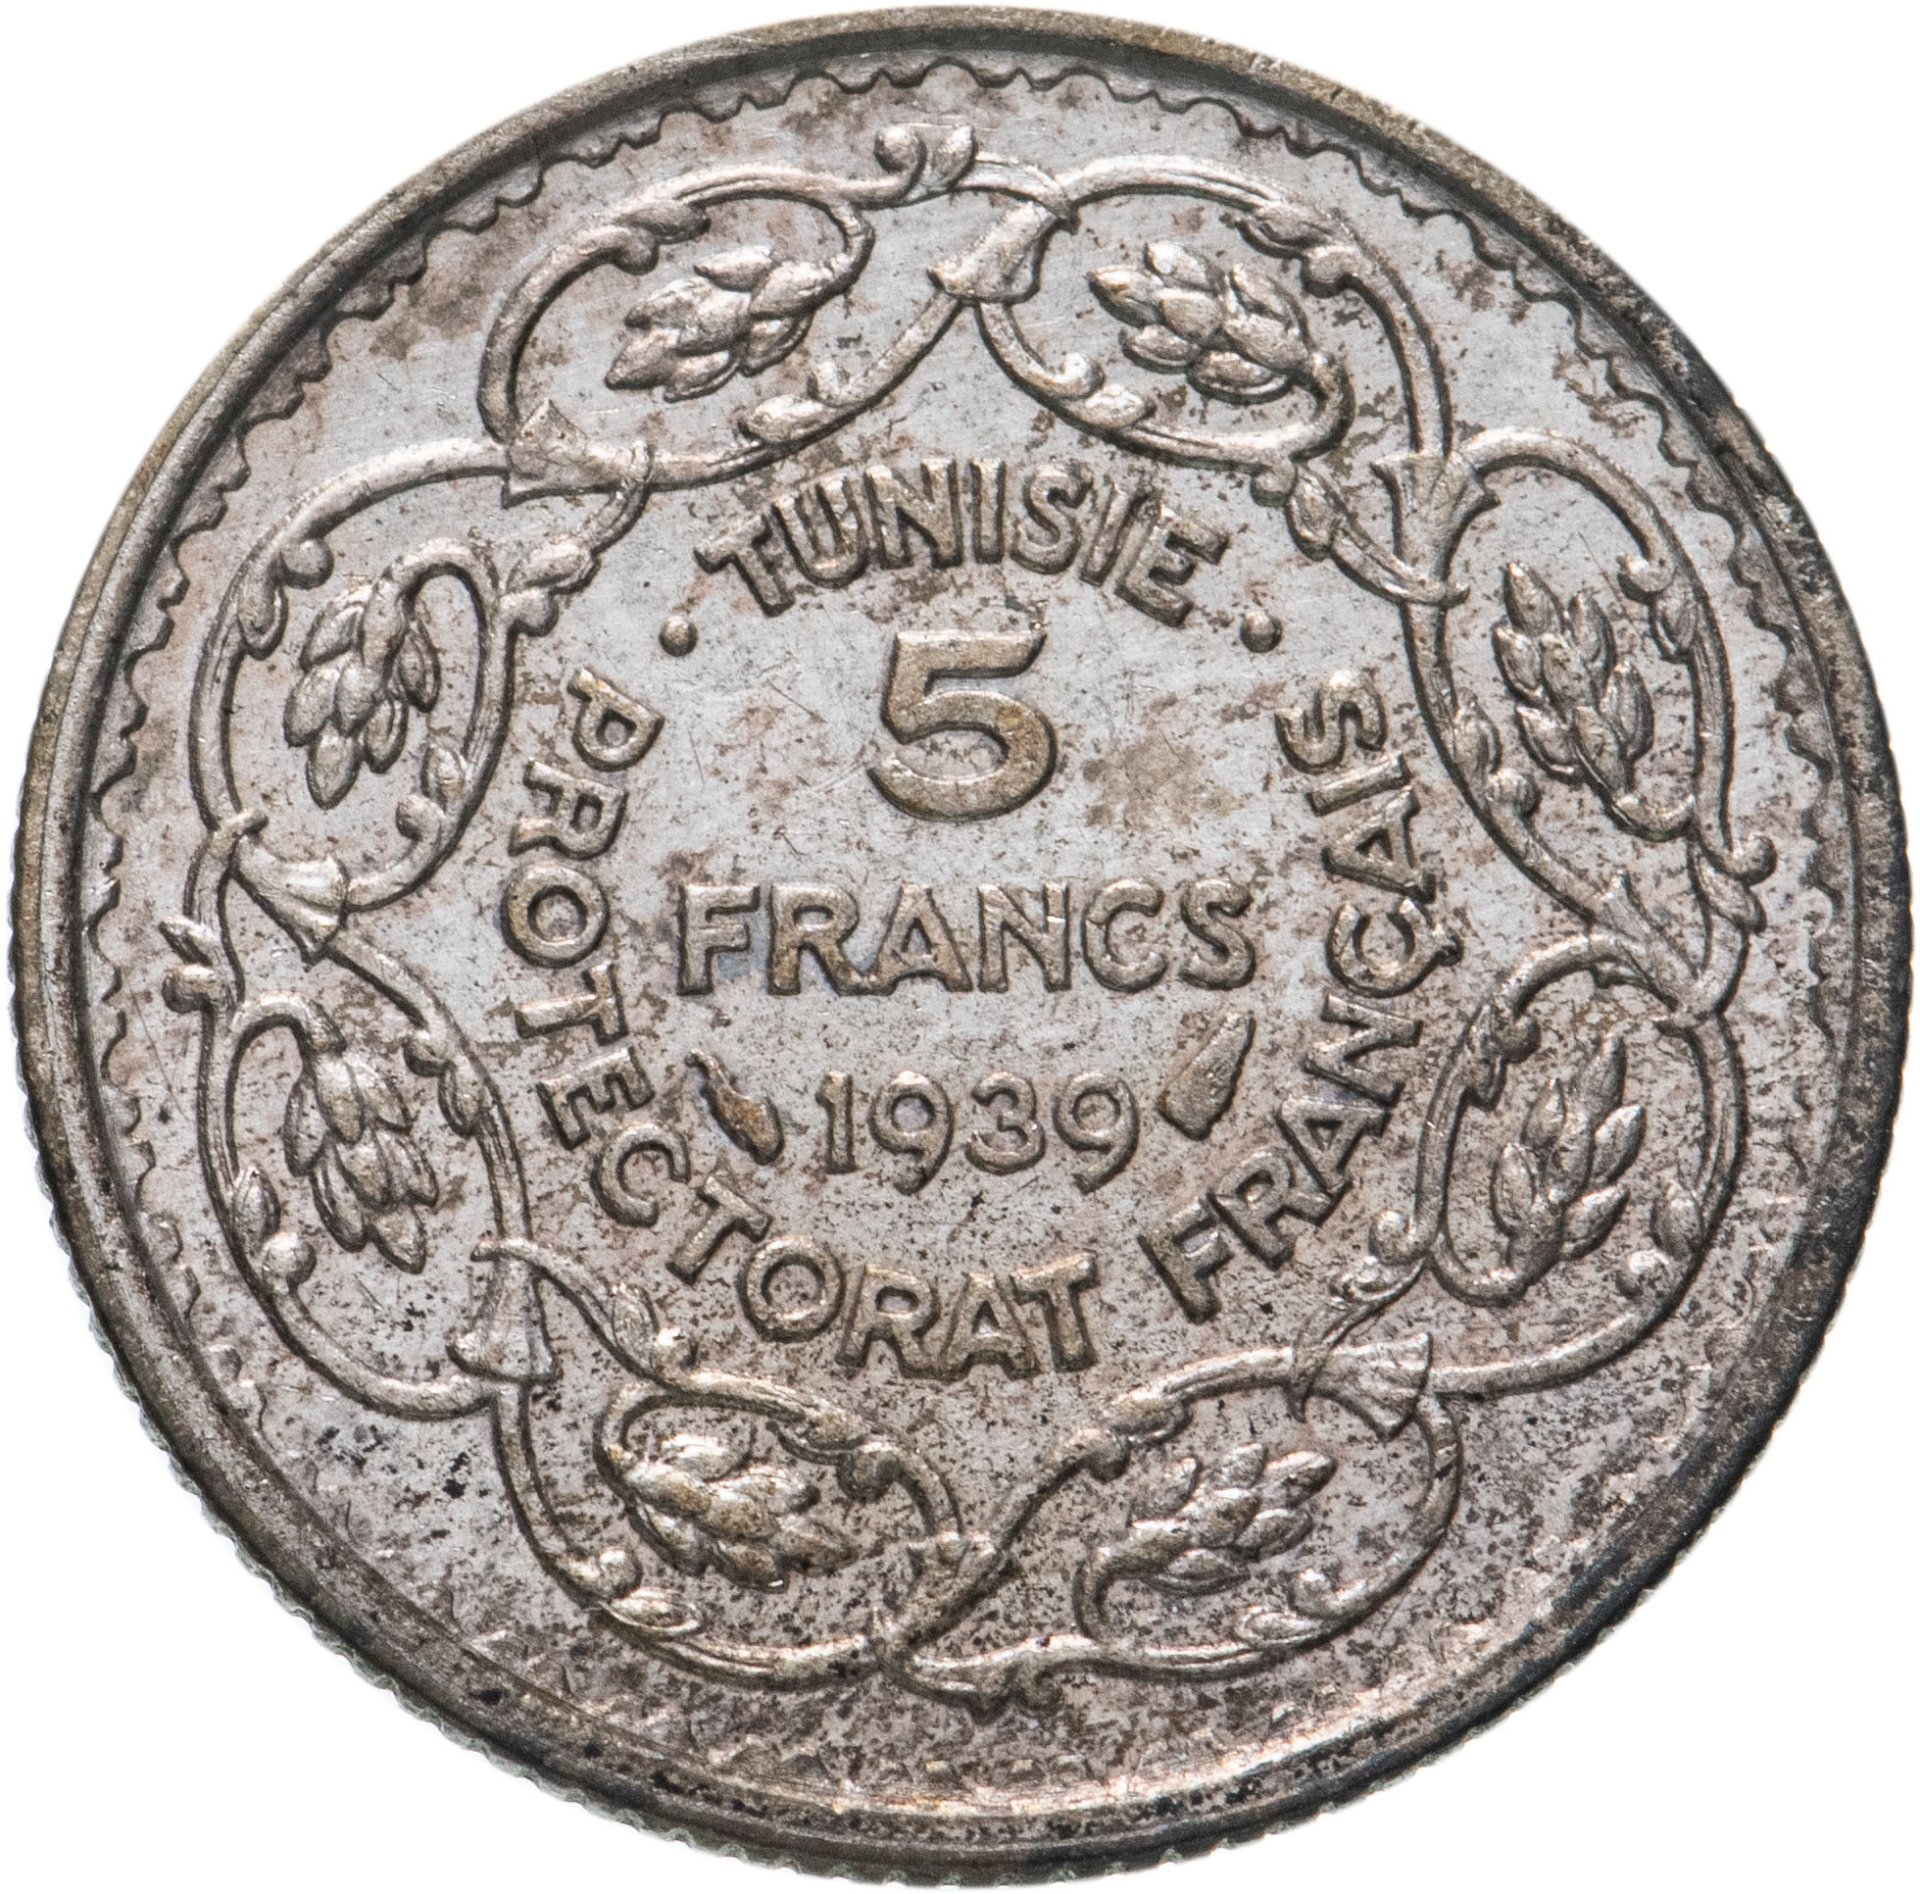 Монета 1939 года. Сколько стоит монета 1939 года. Монета 1939 года цена. Danmark 1939 монета 25 крон.